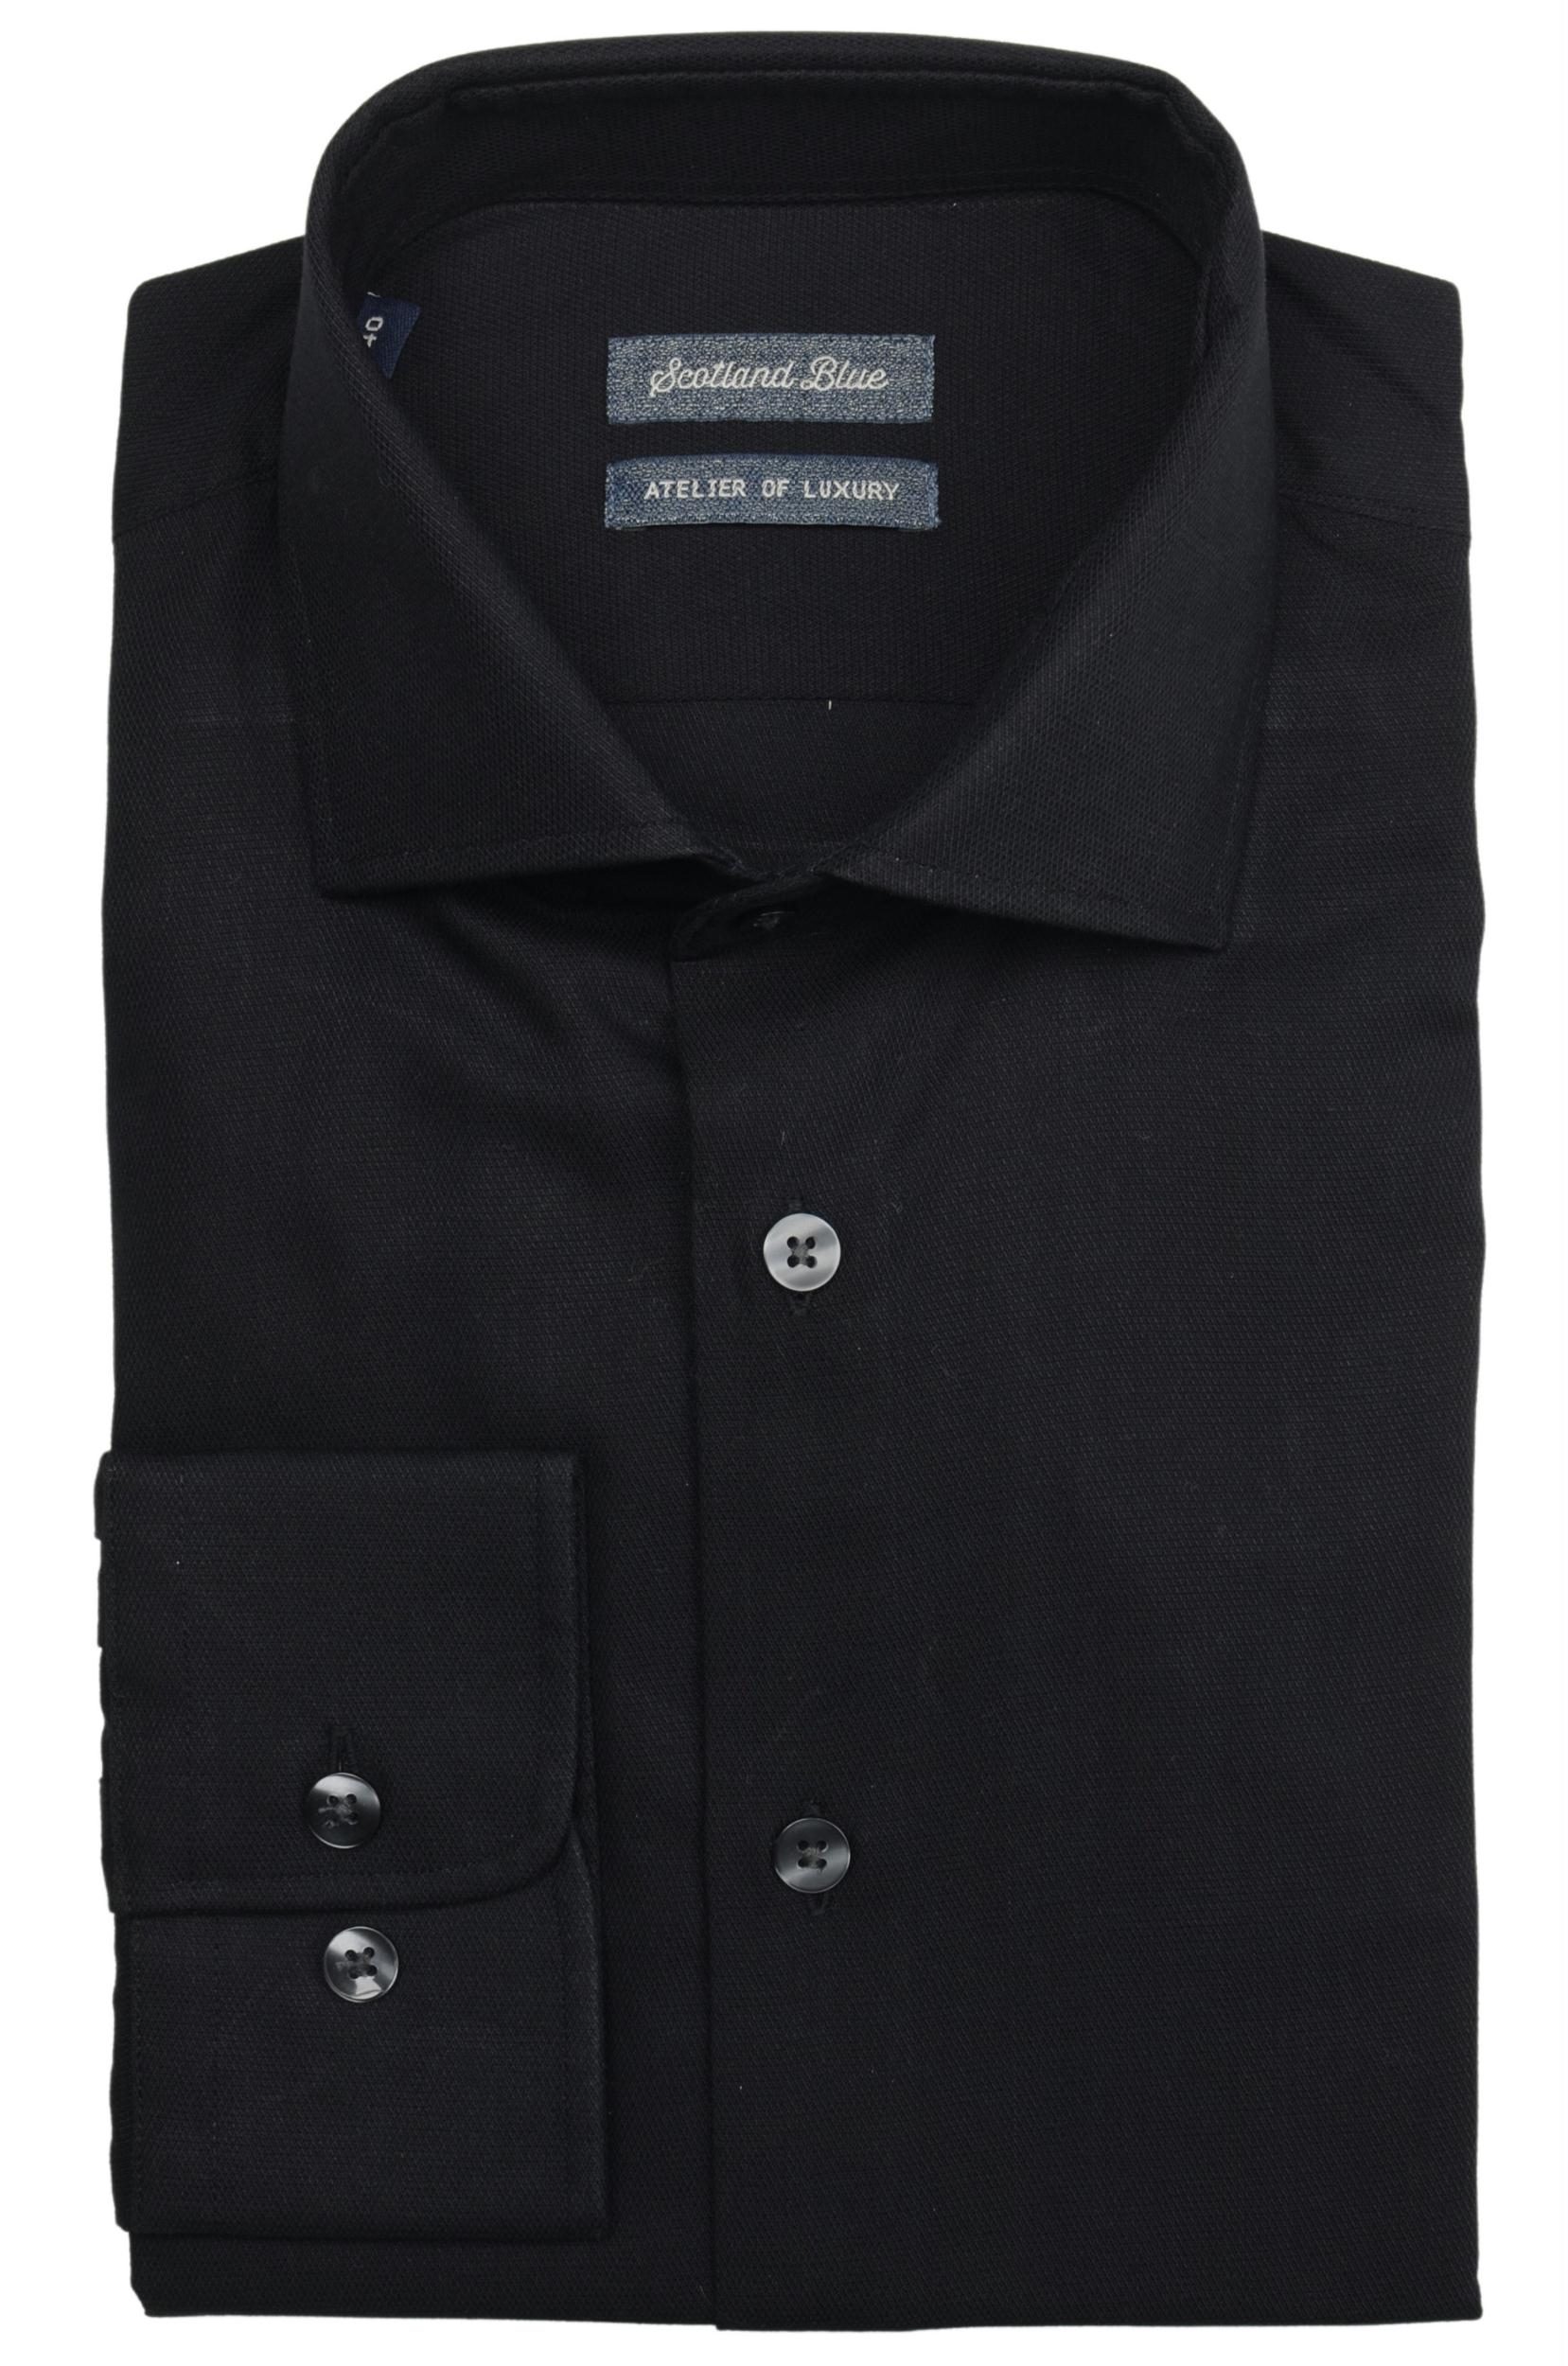 Bos Bright Blue Casual hemd lange mouw Zwart Wesley Dressual Shirt 19306WE18SB/990 black